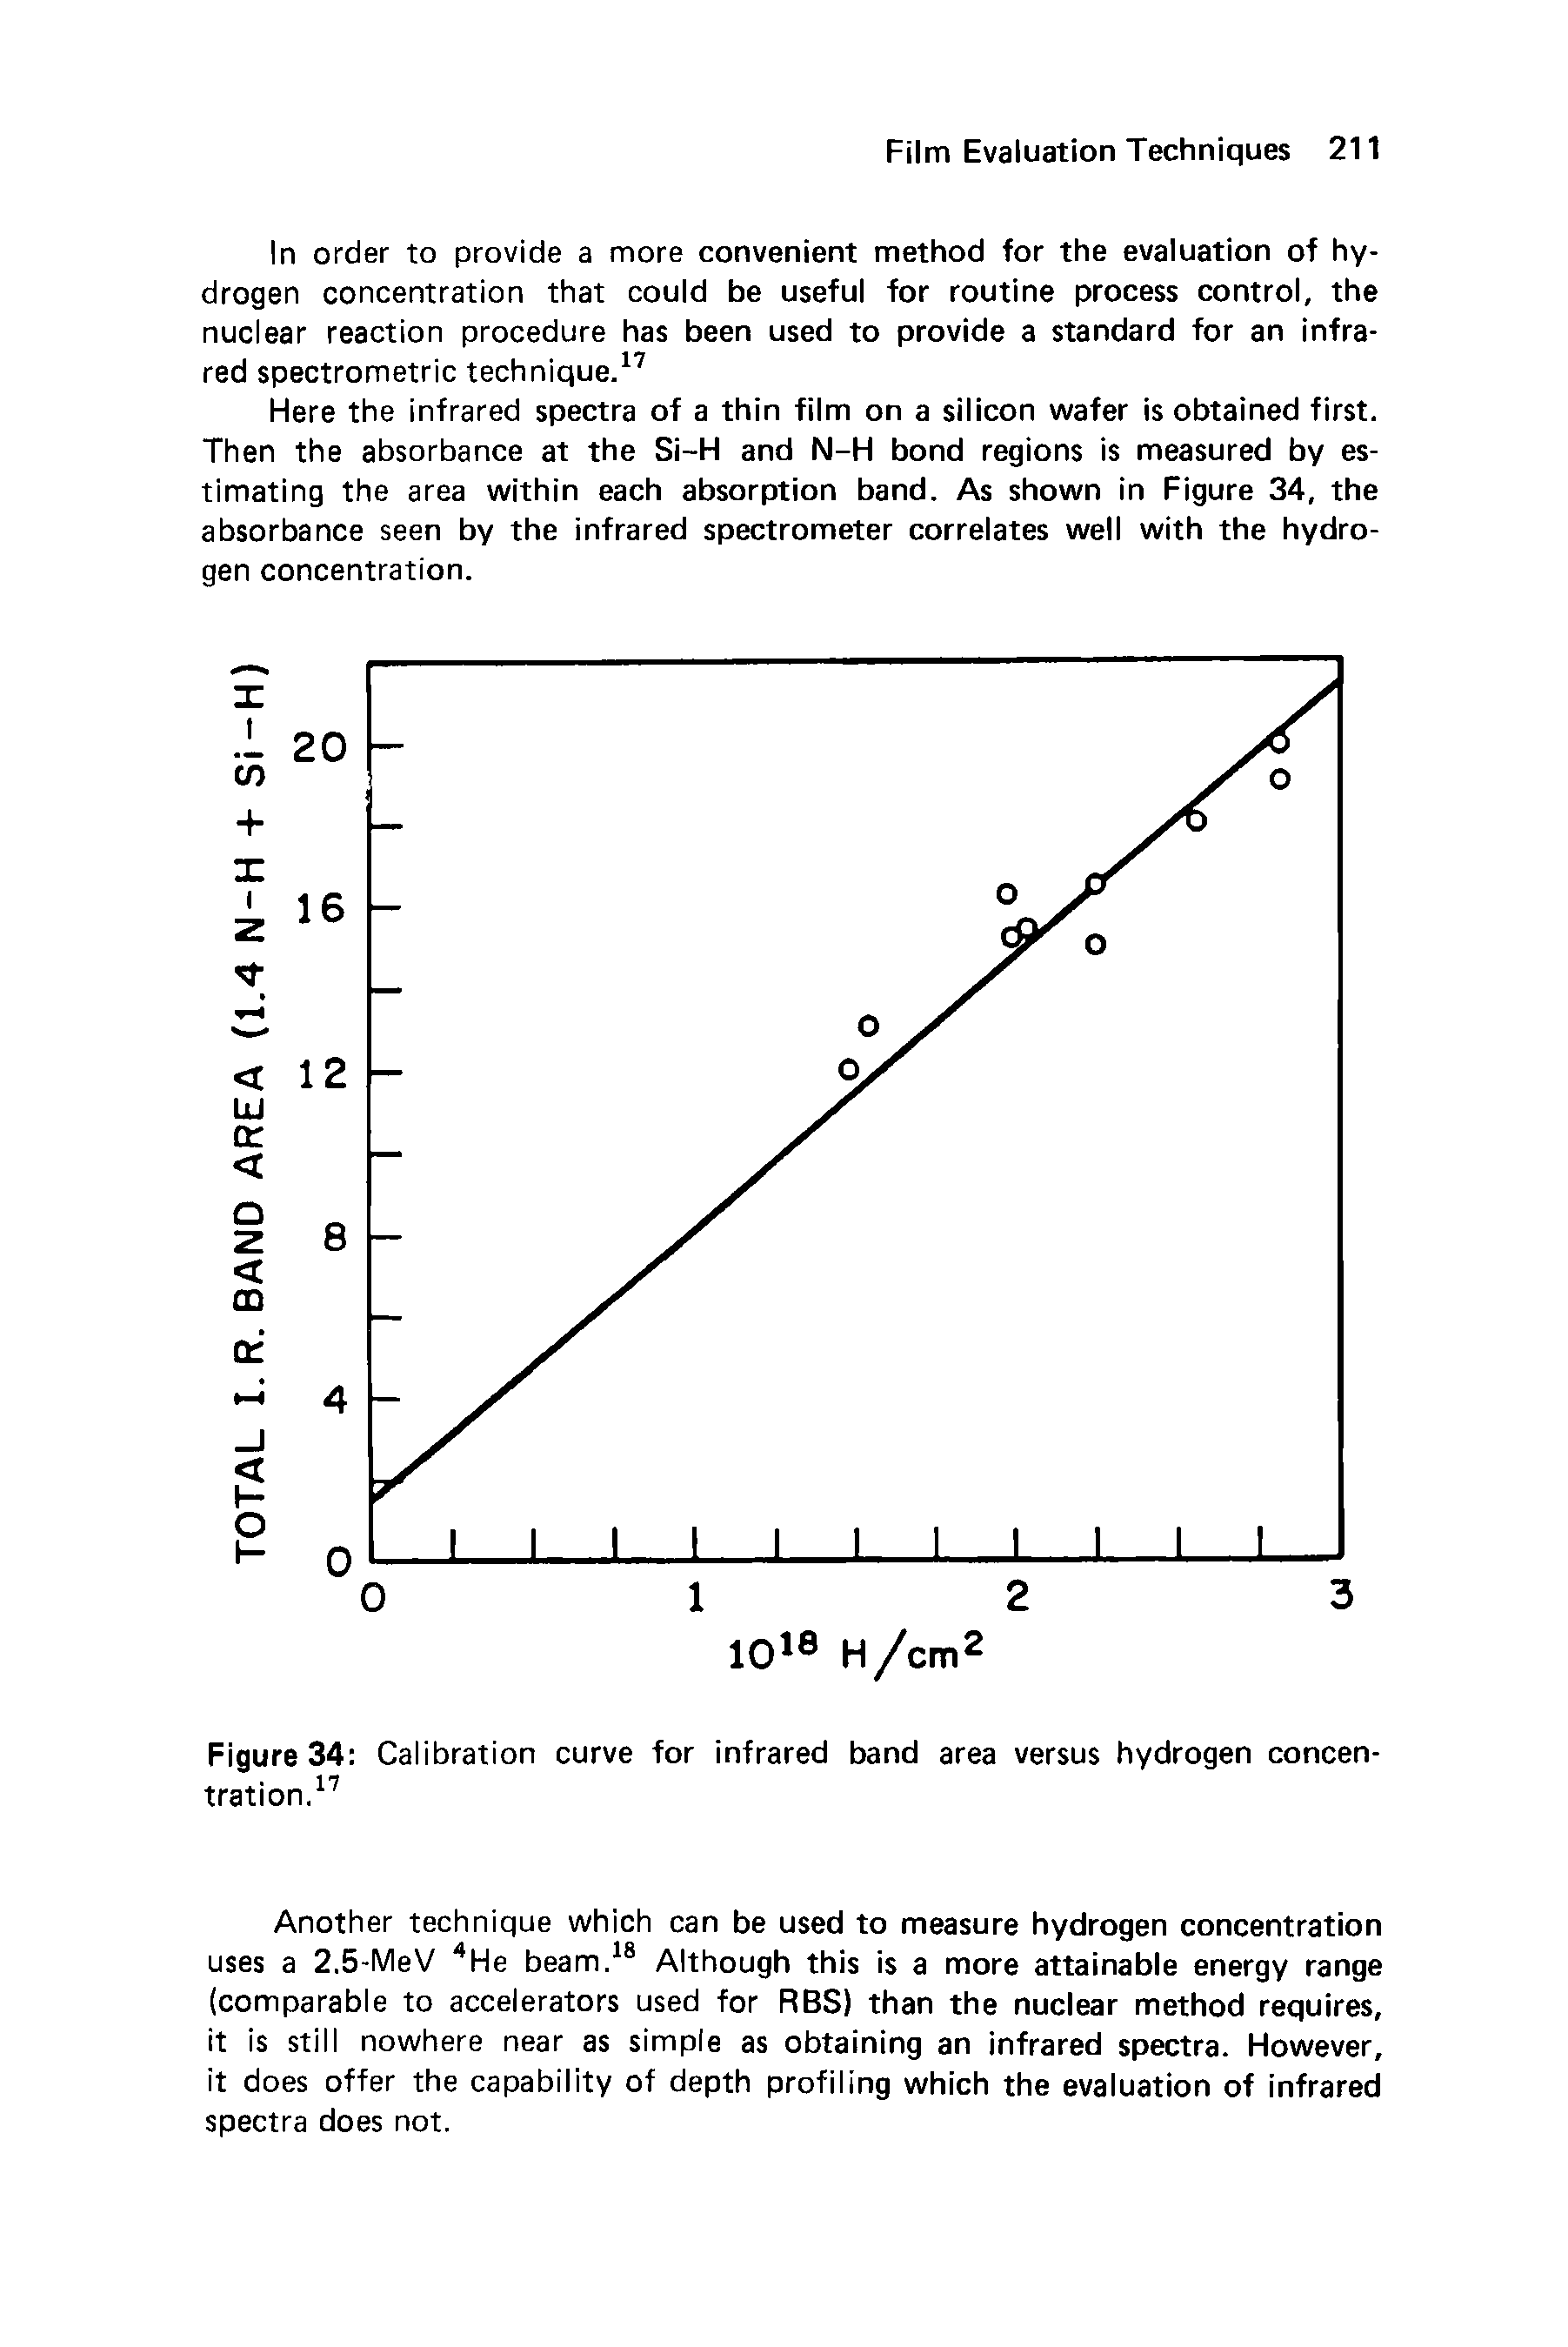 Figure 34 Calibration curve for infrared band area versus hydrogen concentration.17...